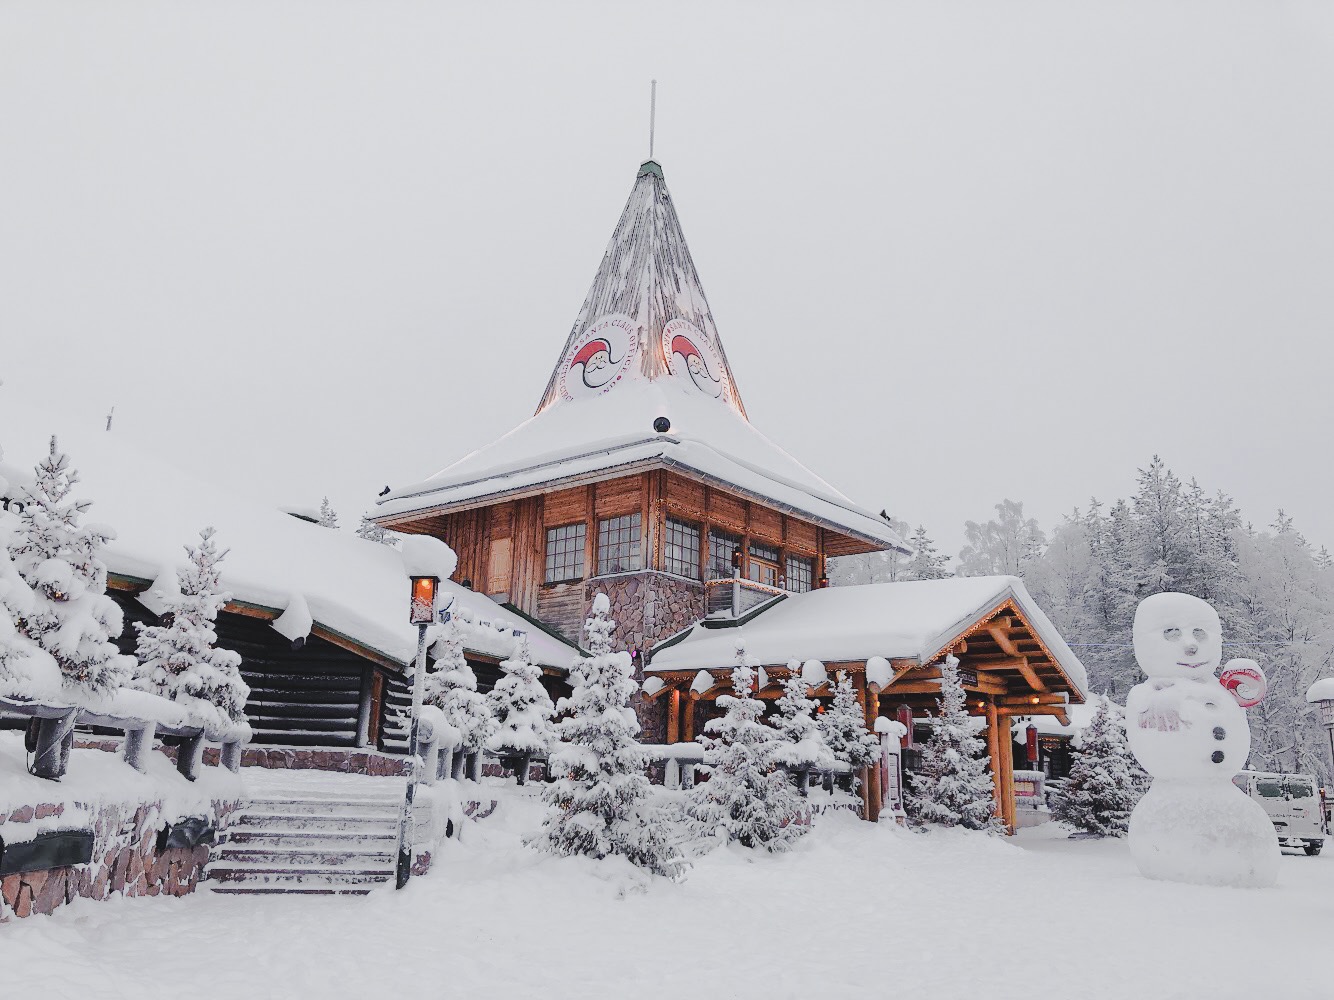 Casa do papai noel coberta de neve em Santa Claus Village, Rovaniemi